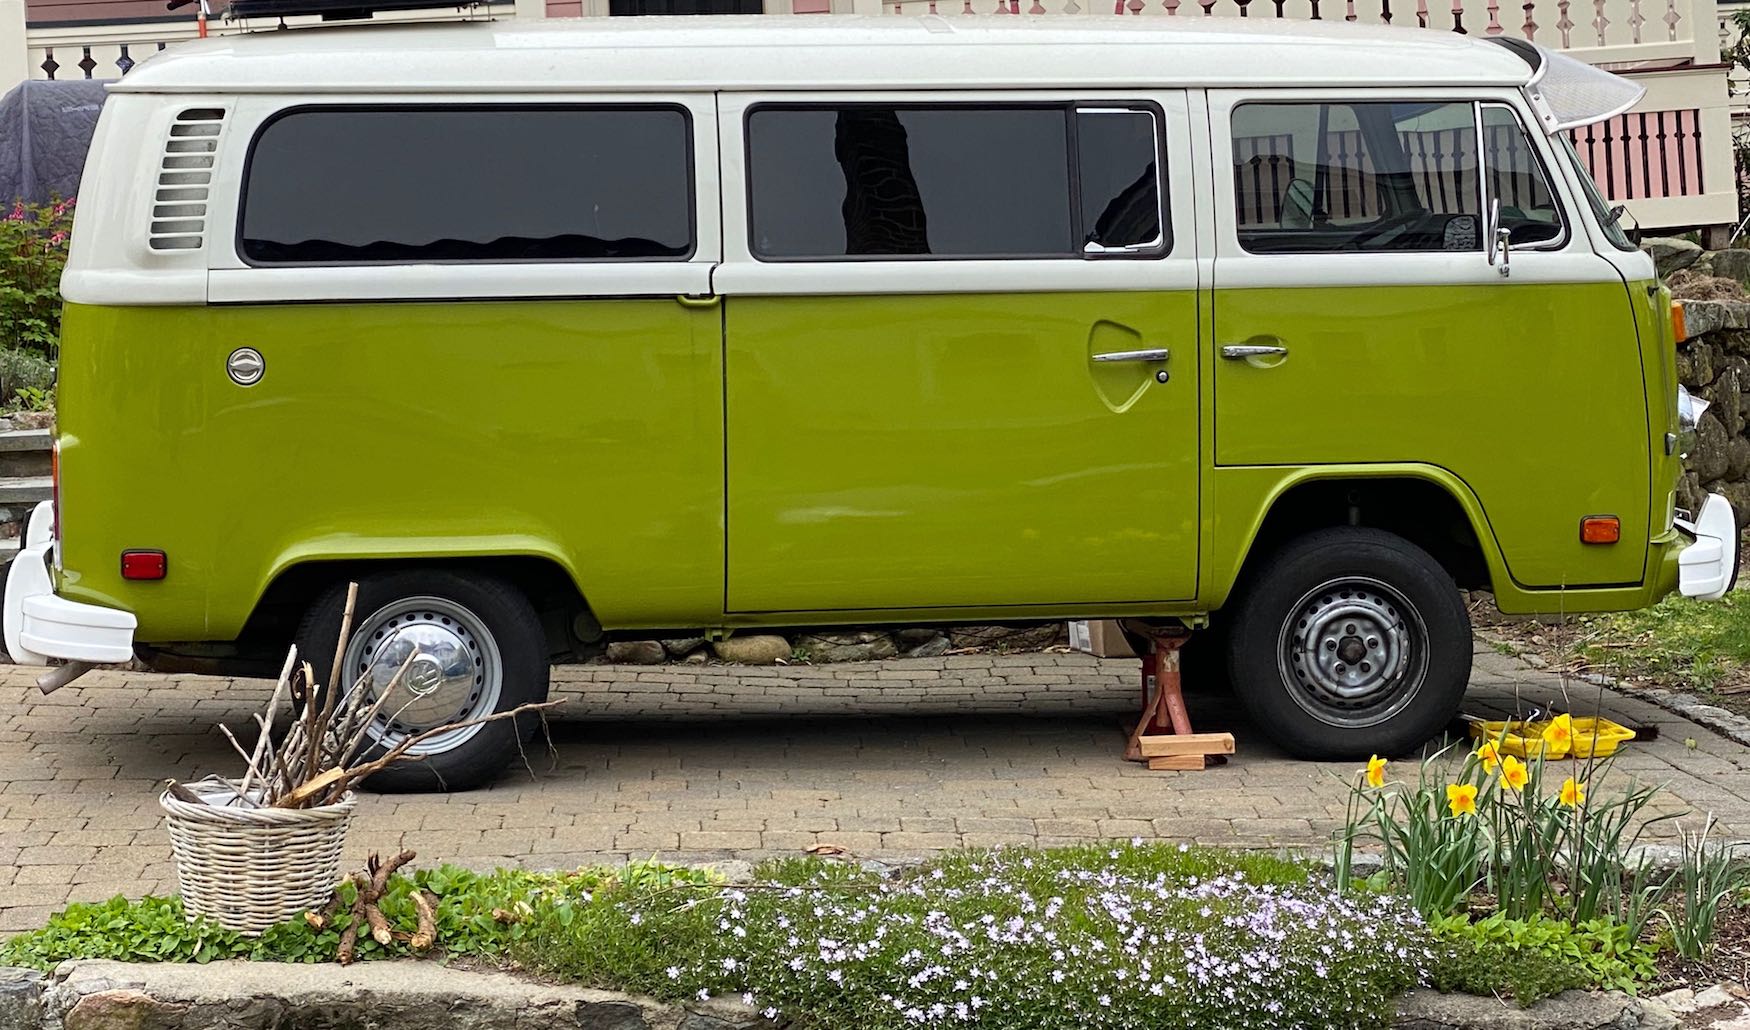 It's the weekend! Number 247, A Beautifully Restored VW Van in a Local Neighborhood